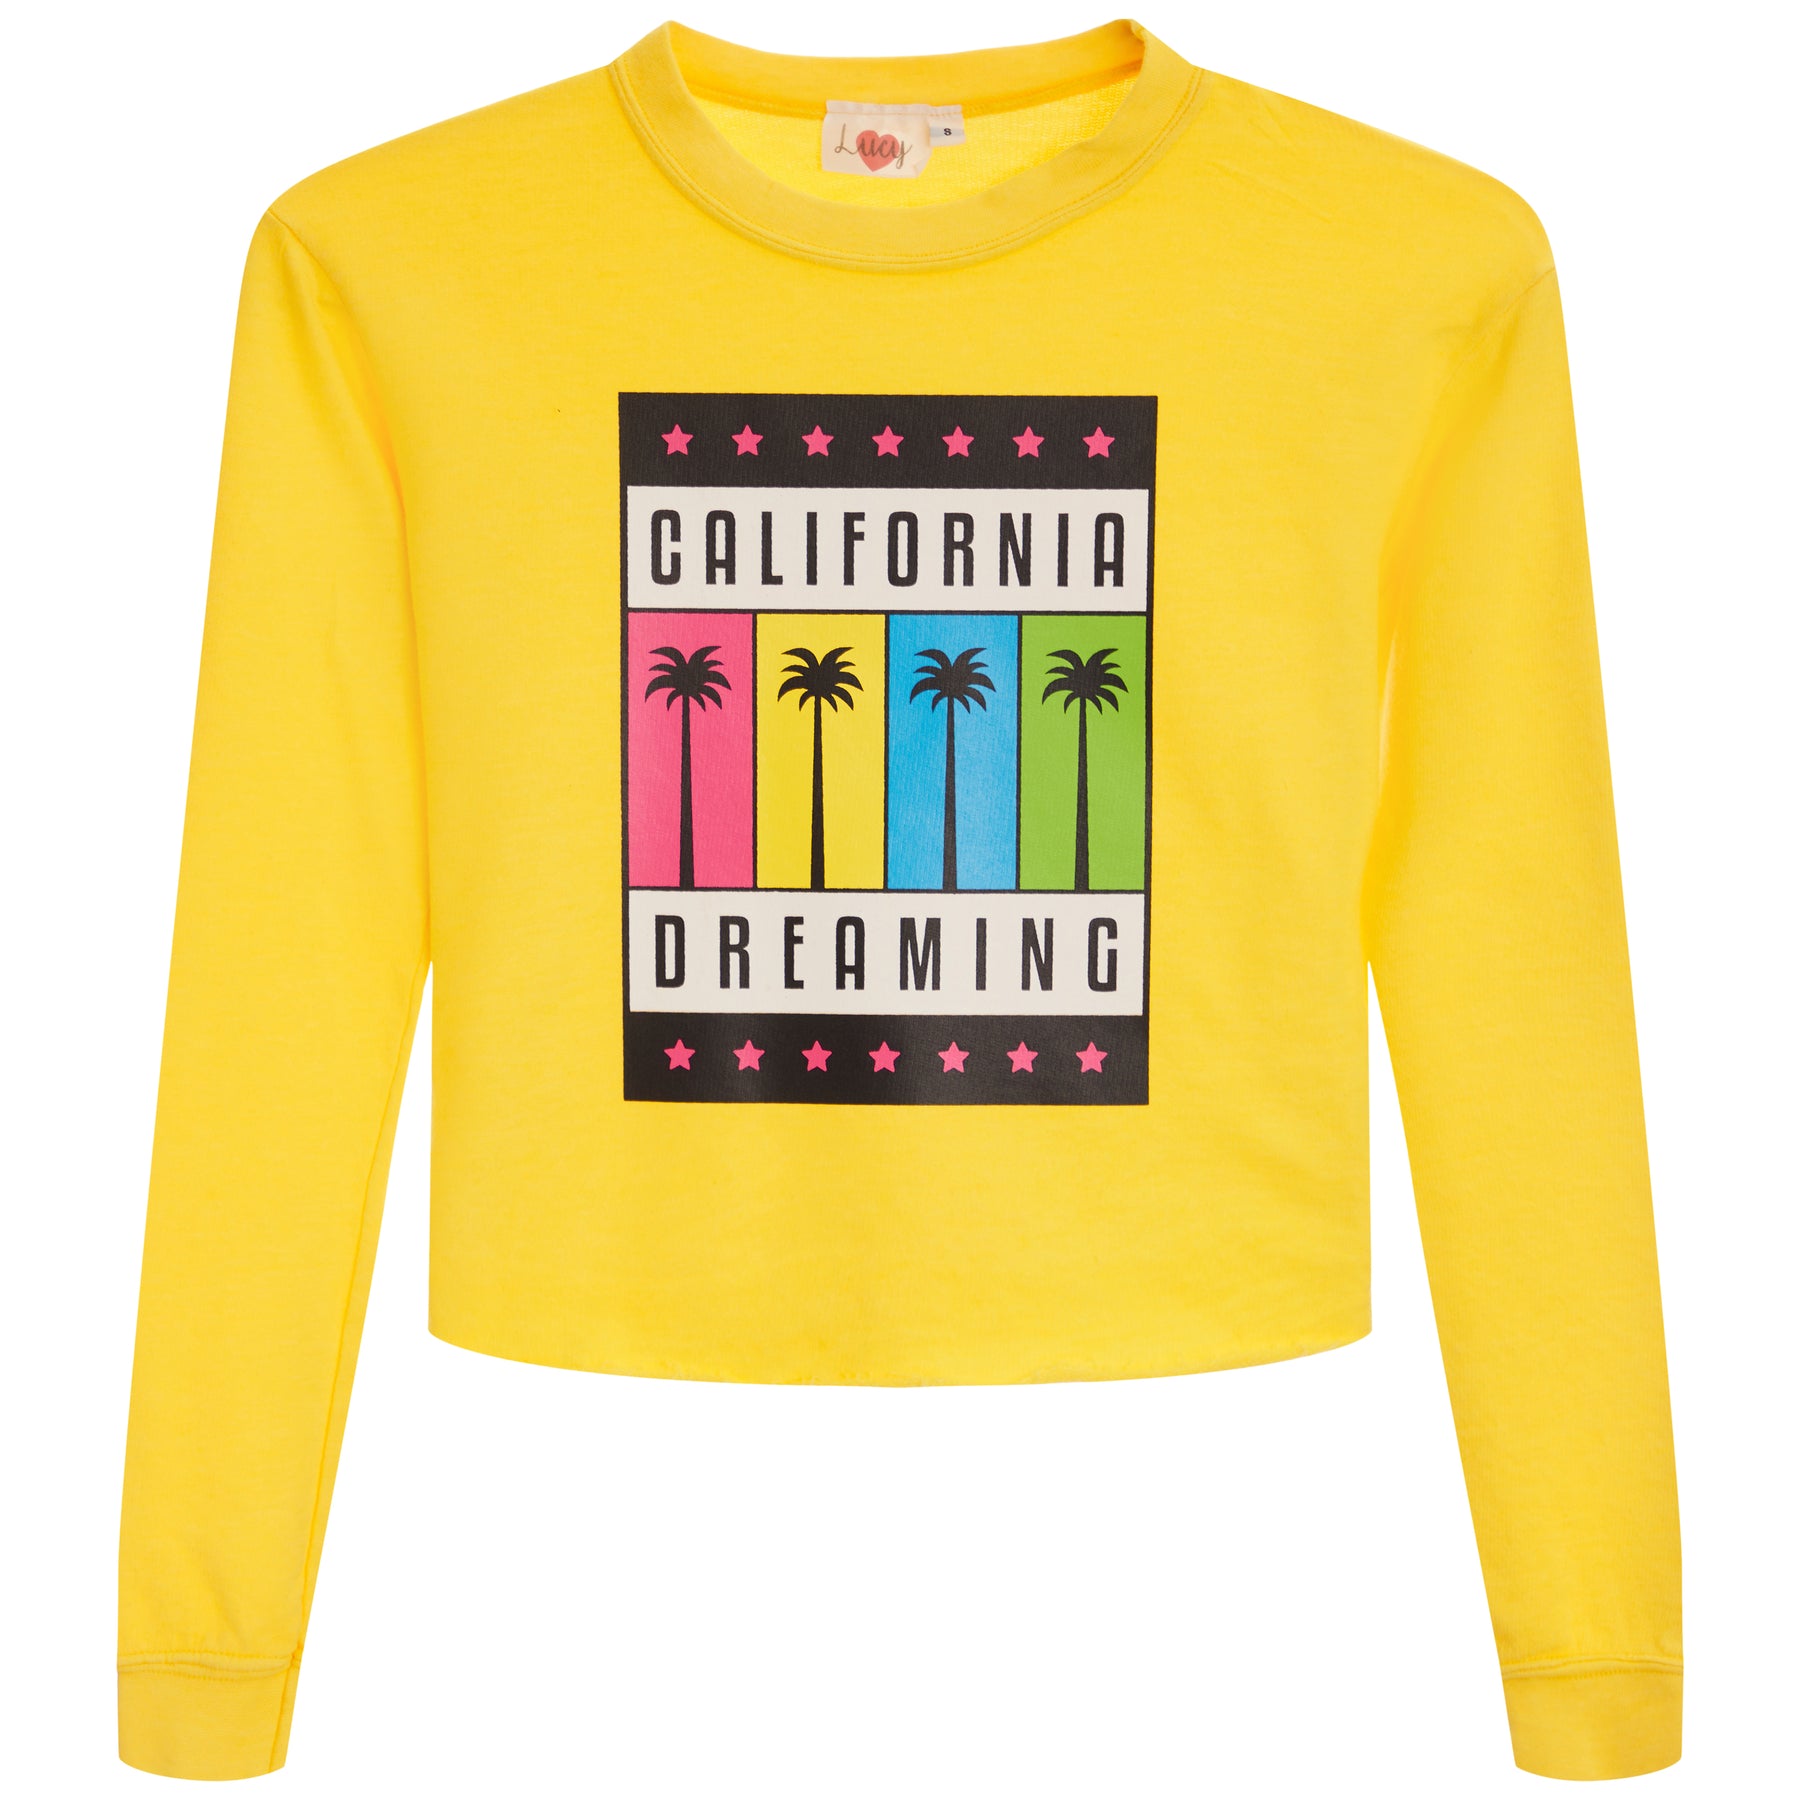 California Dreaming French Terry Sweatshirt